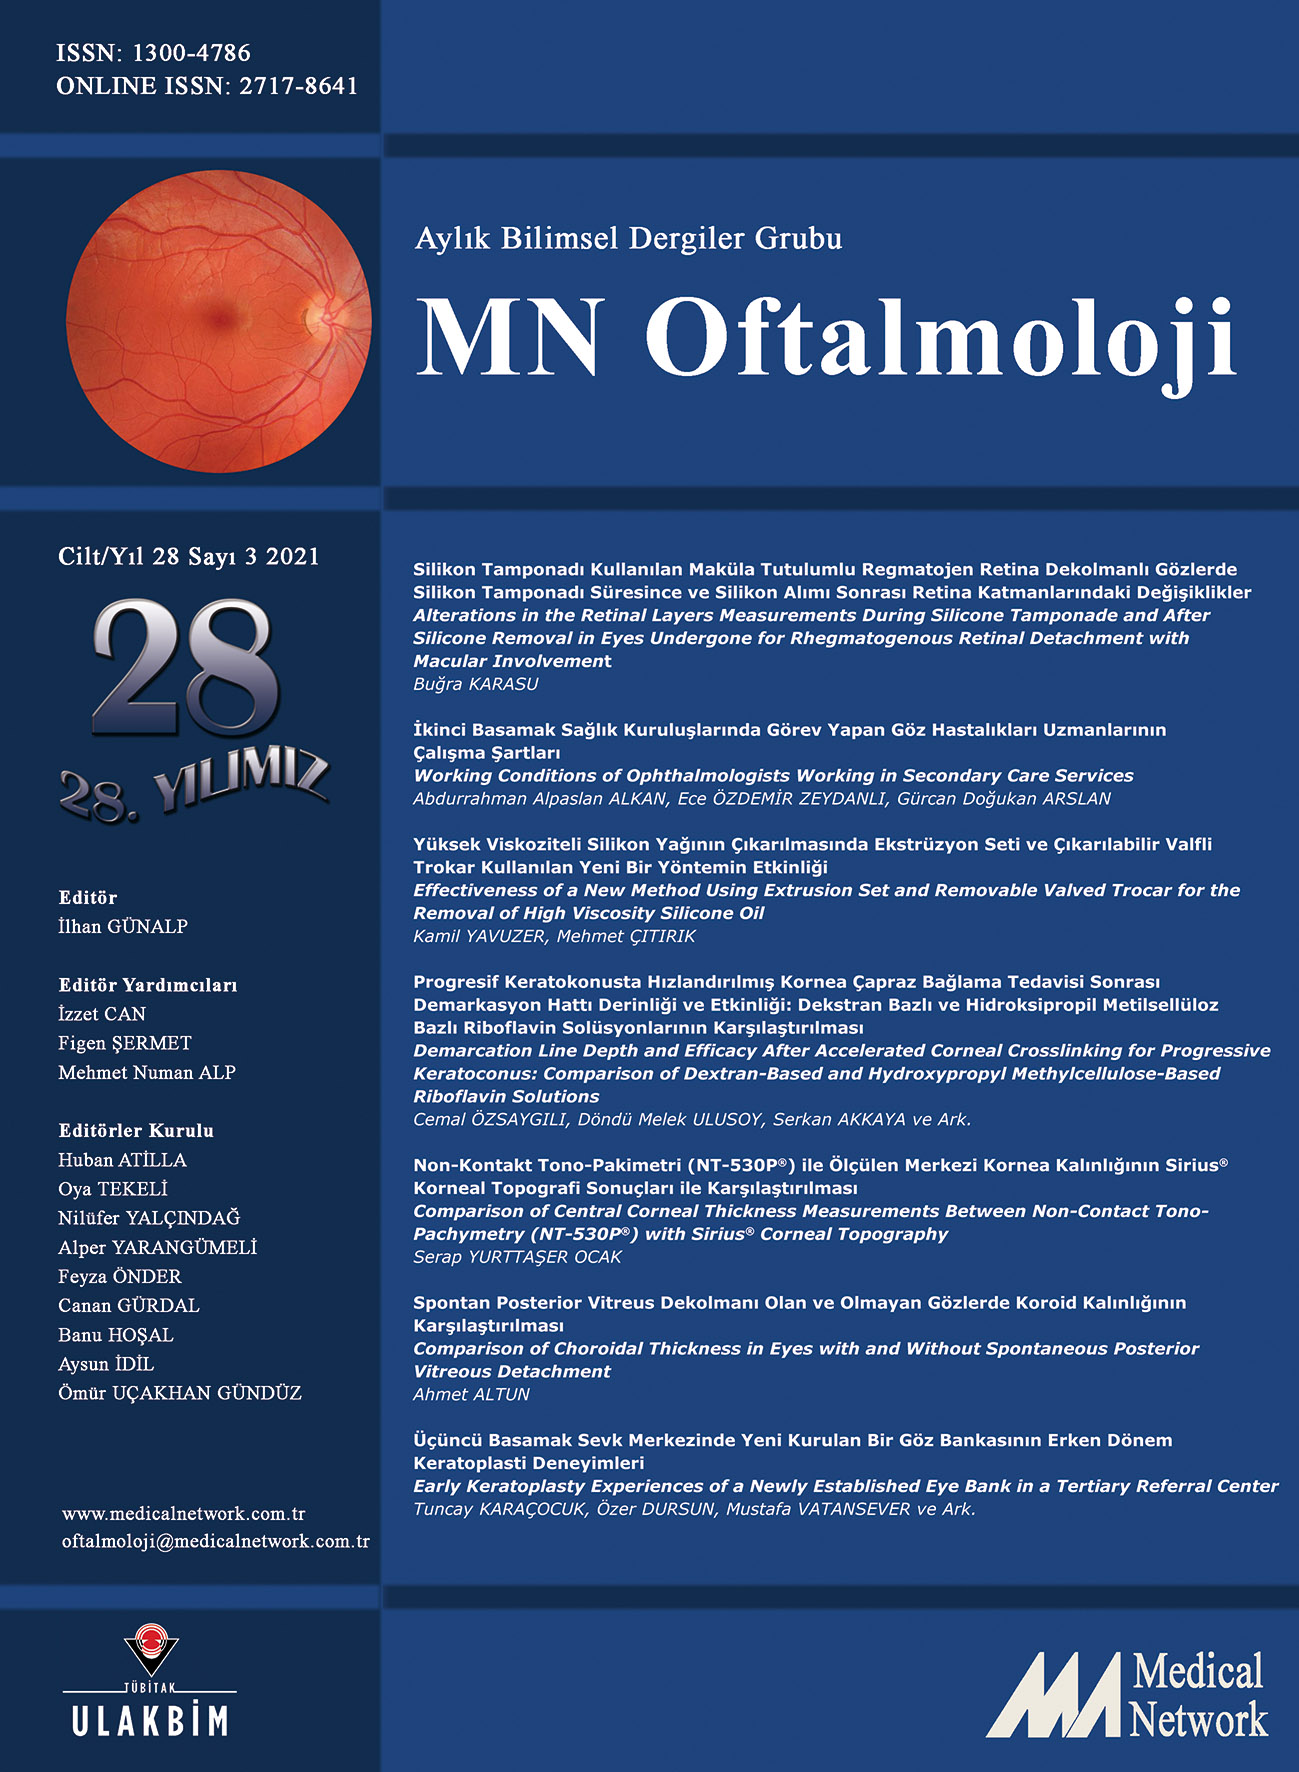 <p>MN Oftalmoloji Cilt: 28 Sayı: 3 2021 (MN Ophthalmology Volume: 28 No: 3 2021)</p>